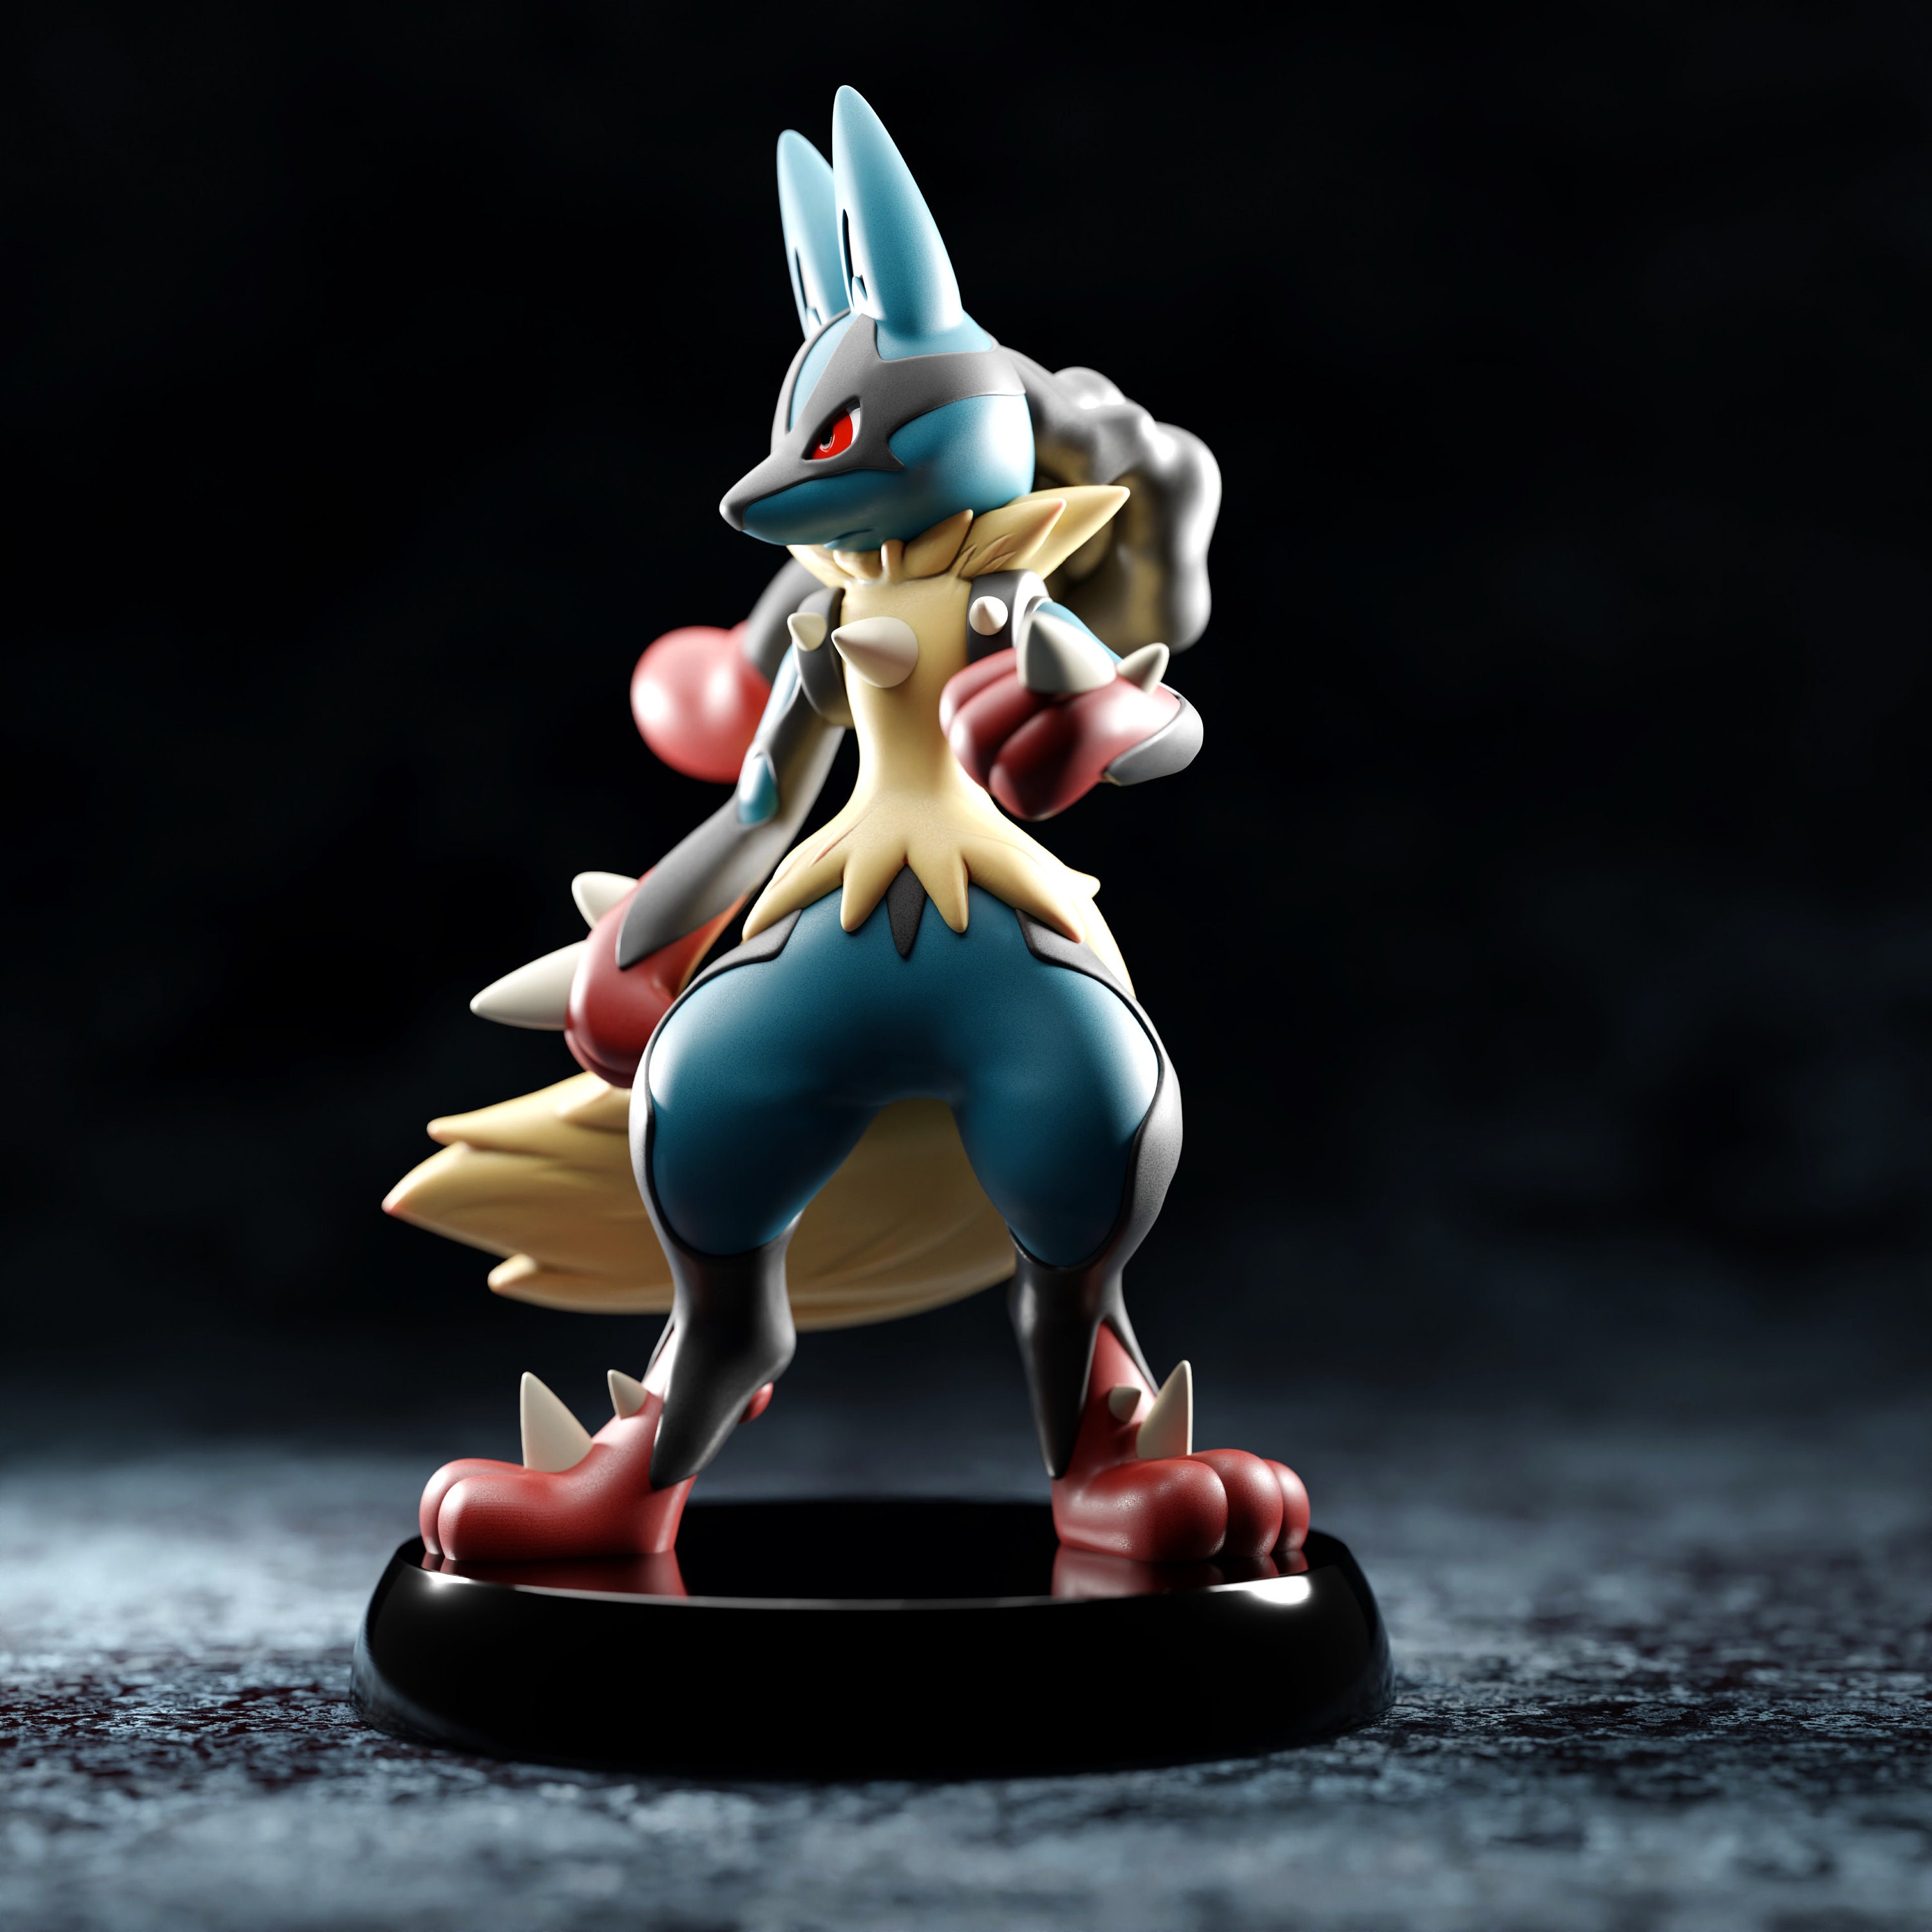 Mega Pokémon Figures Making - Mega Charizard, Lucario, Venusaur